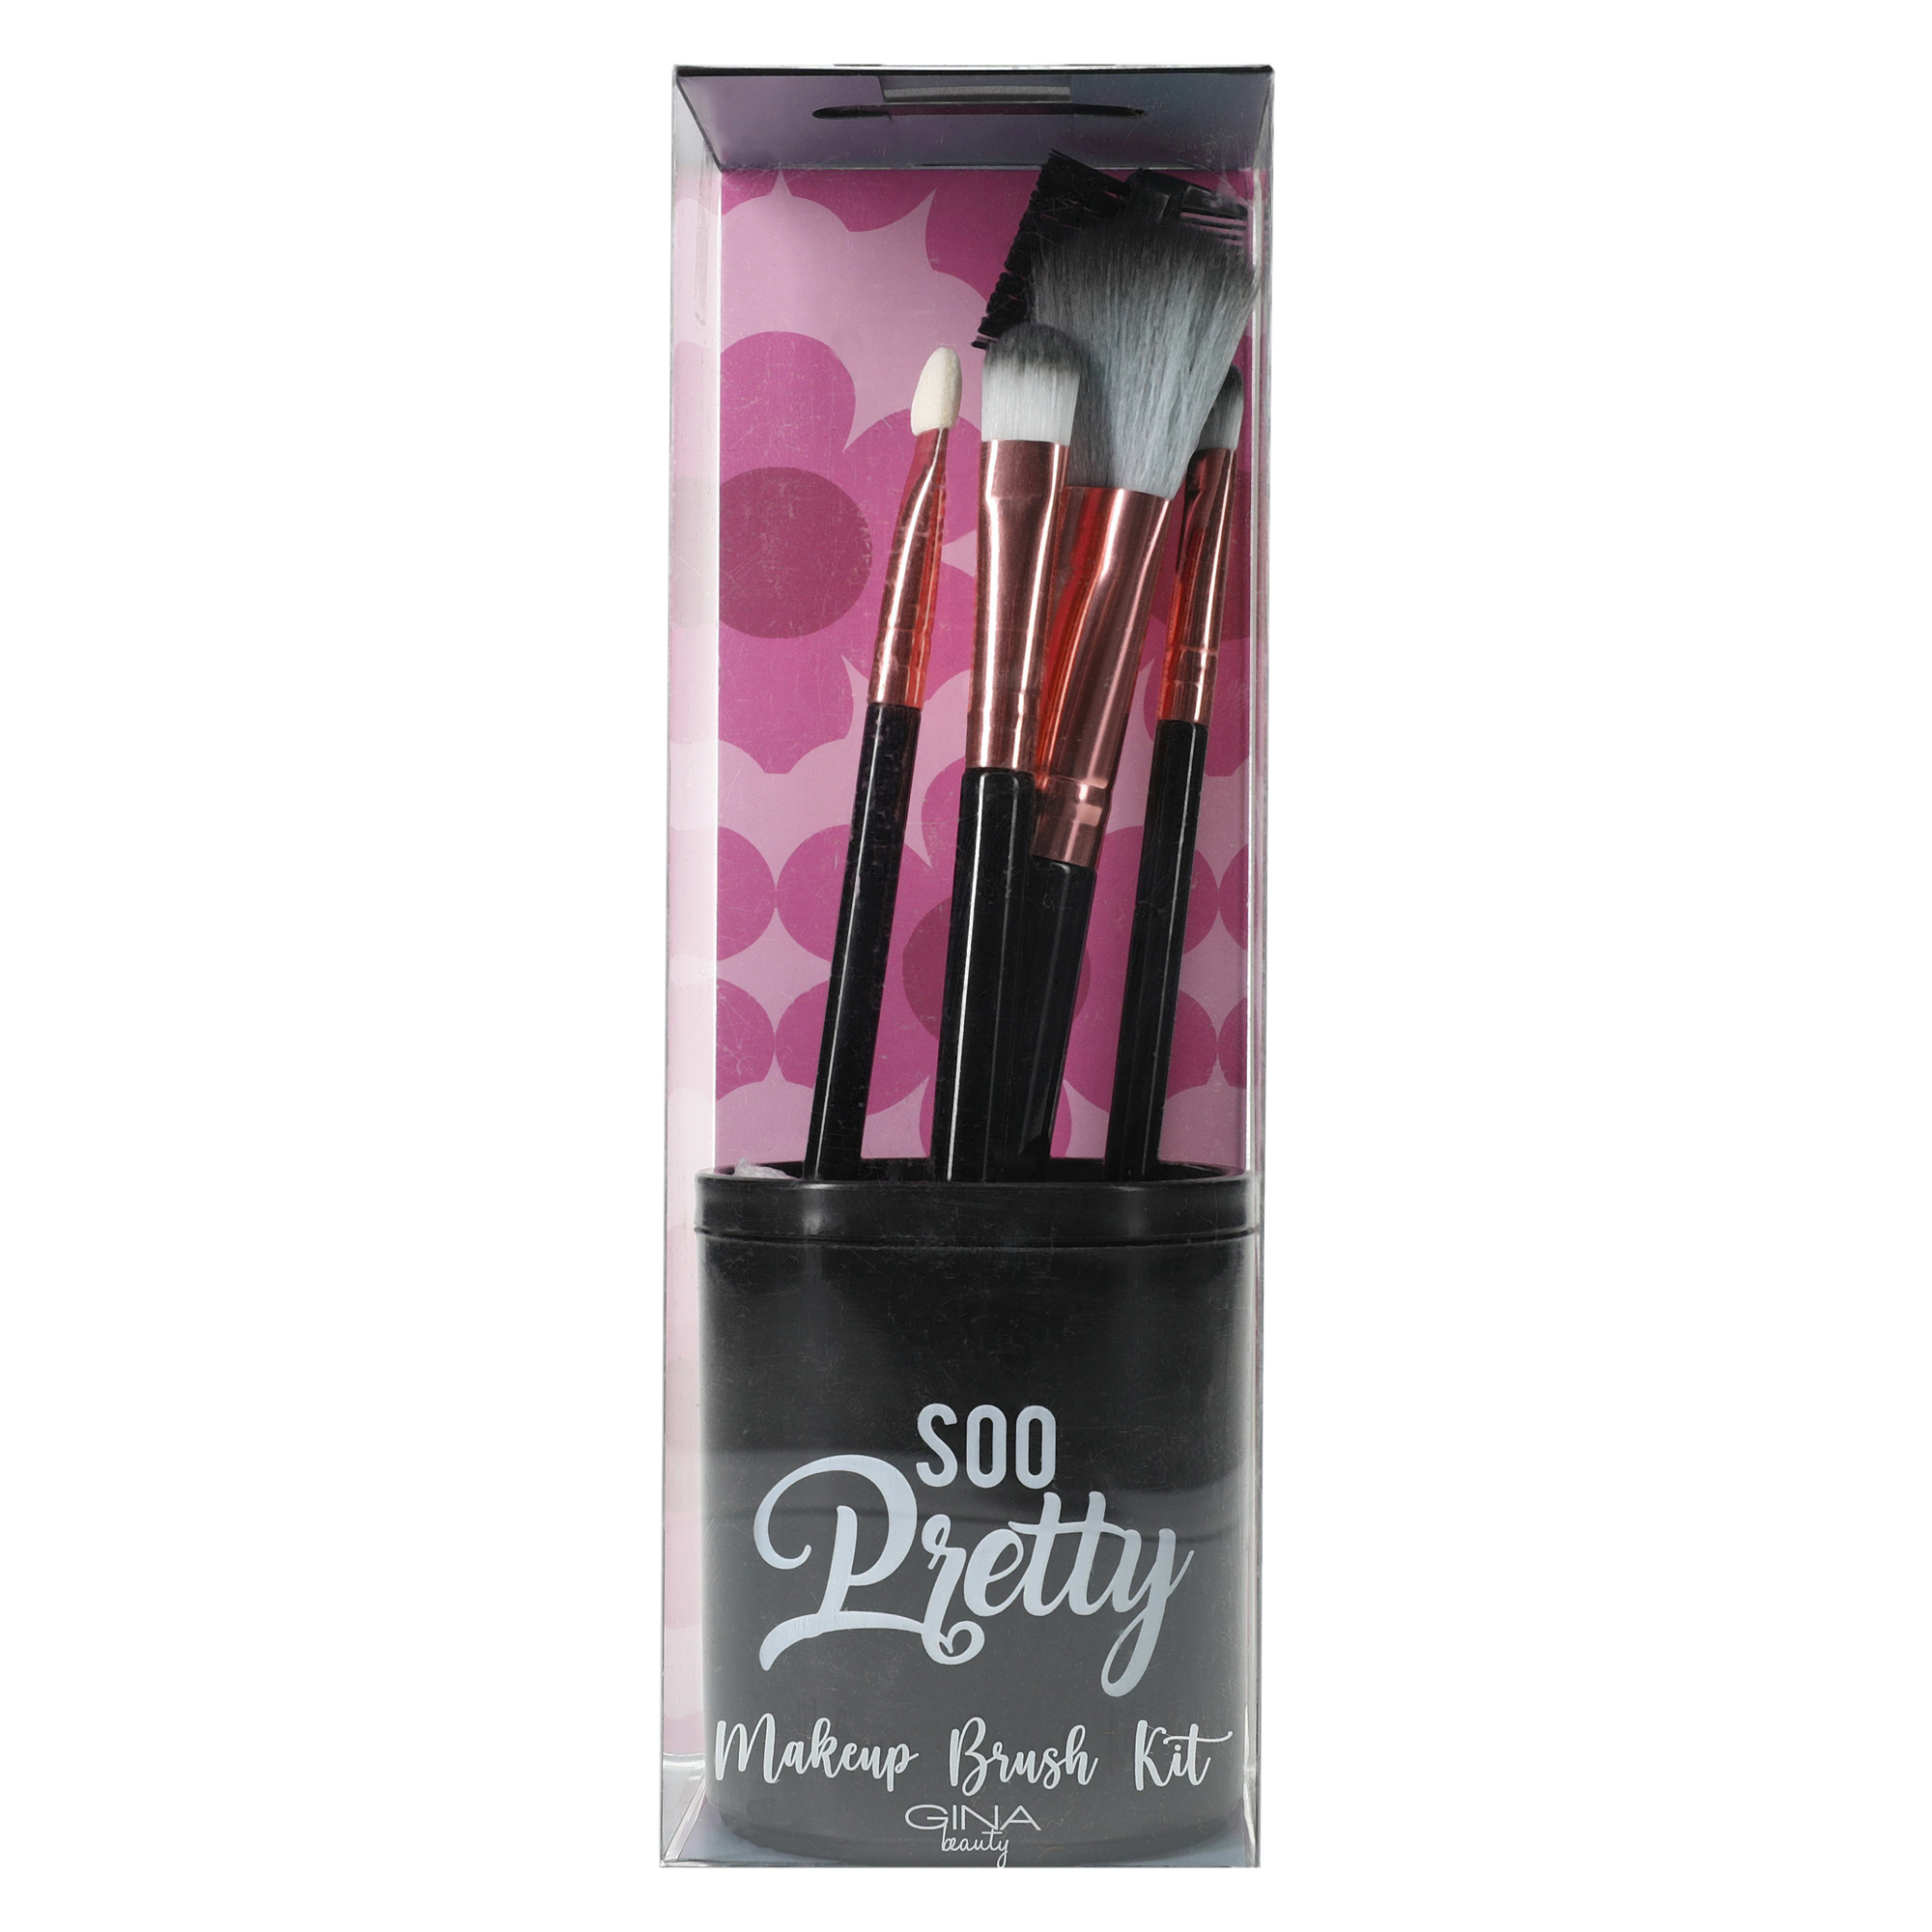 gina beauty™ makeup brush set with holder 6-piece